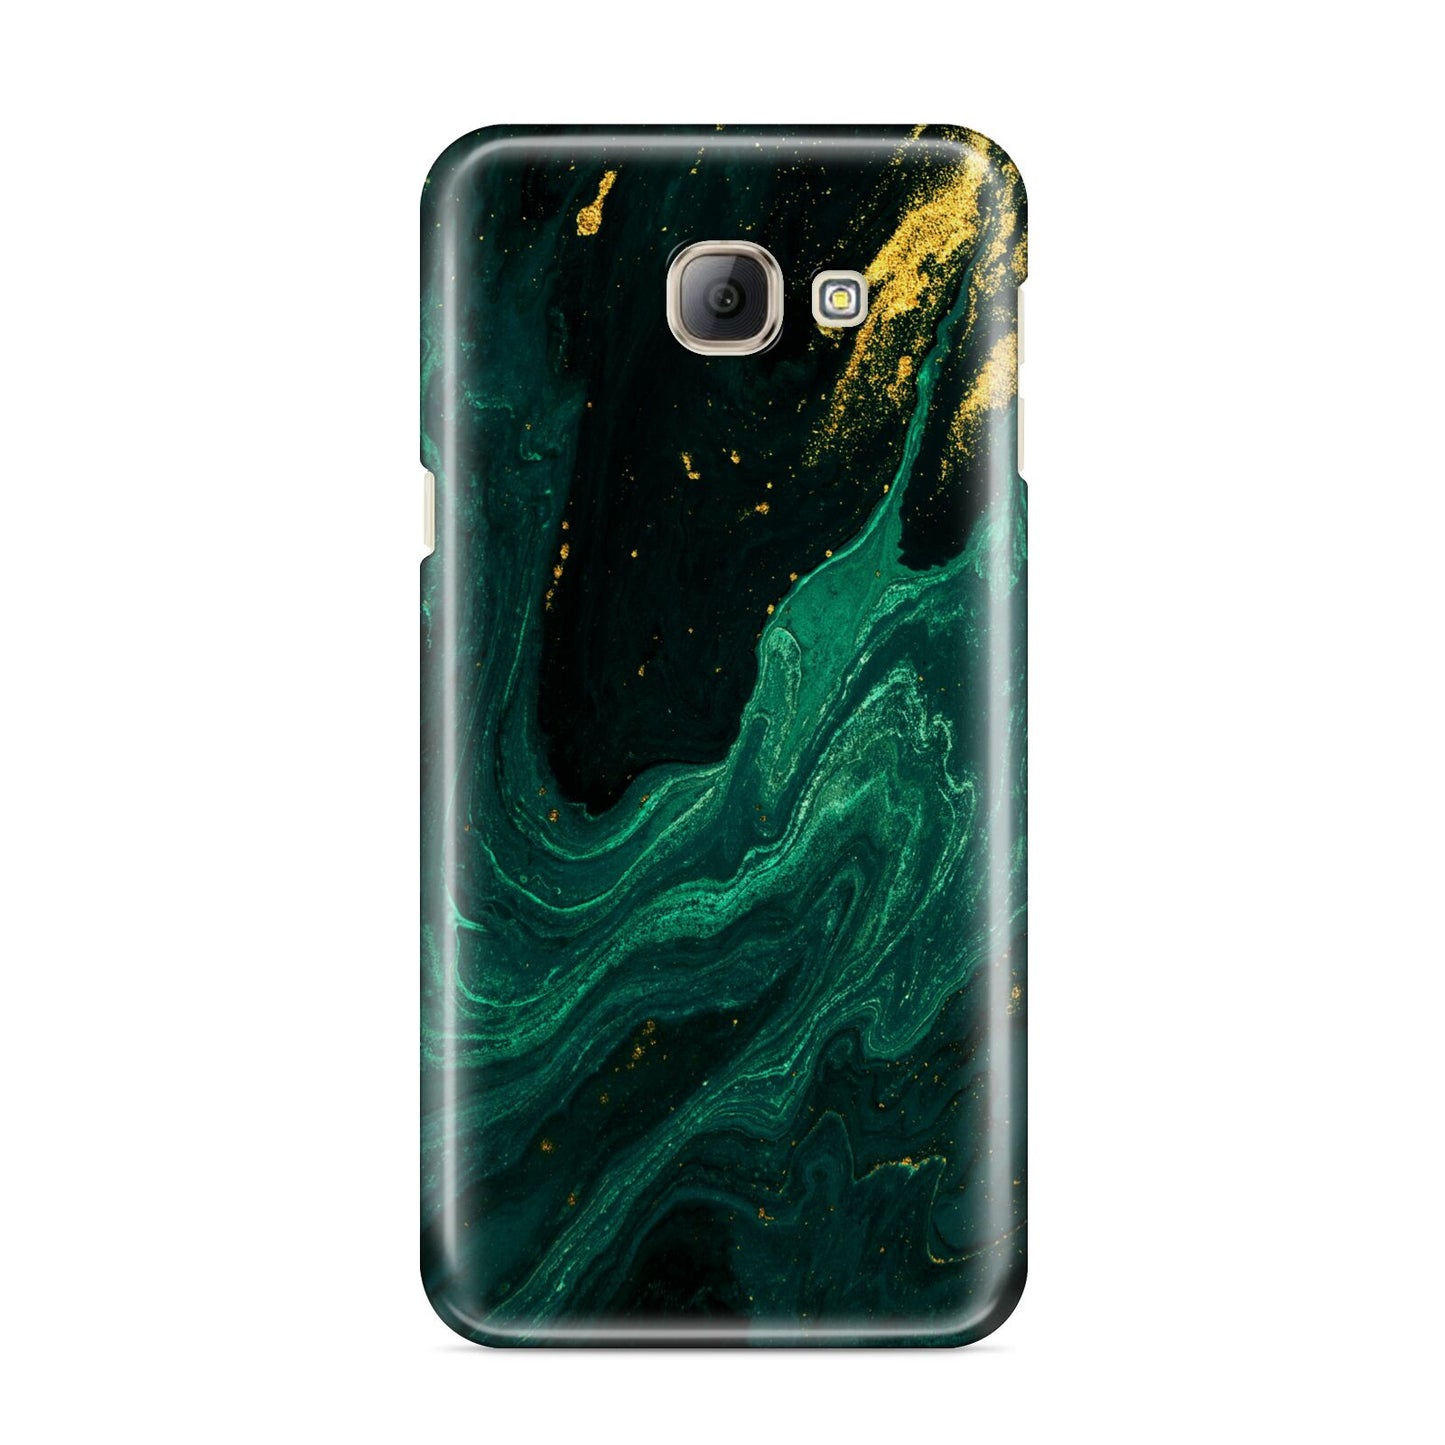 Emerald Green Samsung Galaxy A8 2016 Case